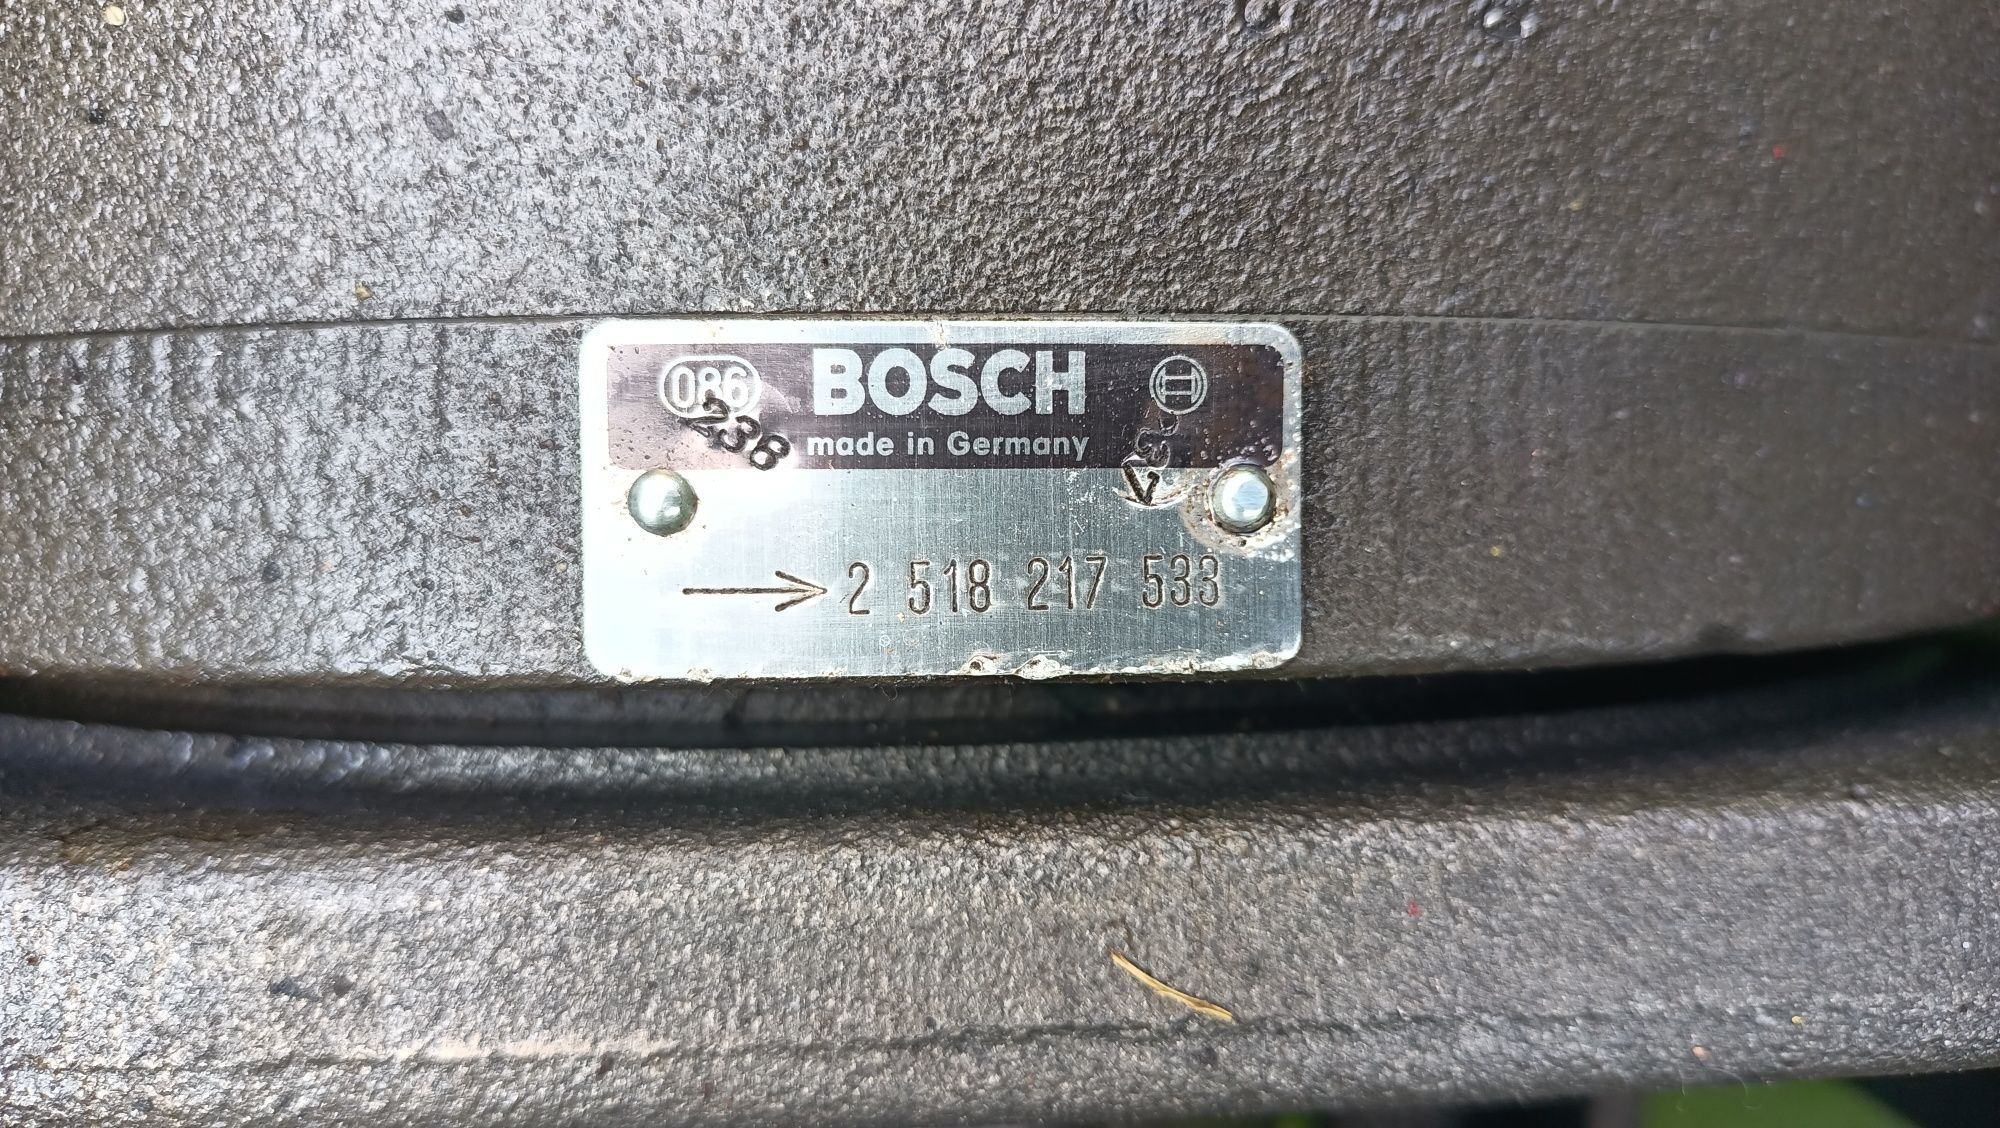 Pompa Bosch do wtryskarki Arburg